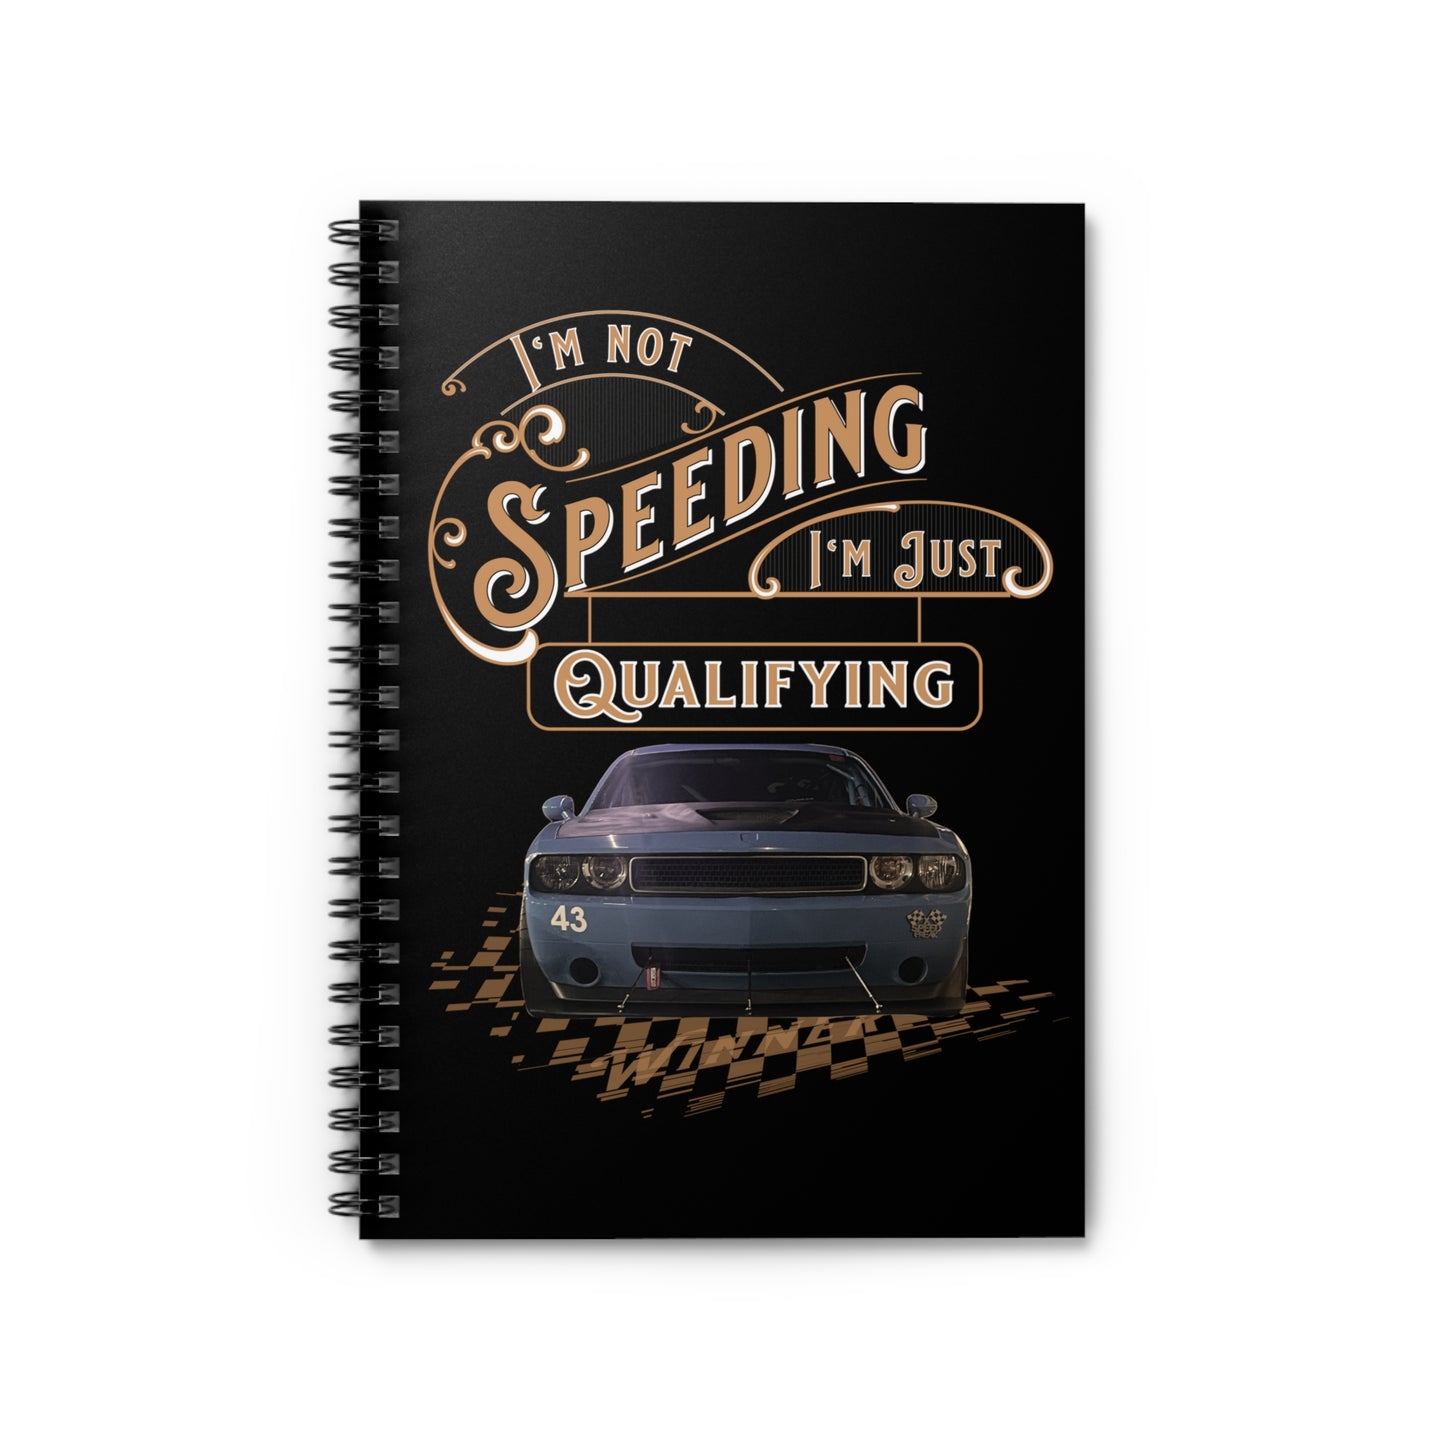 Spiral Notebook - Ruled Line - I'm not speeding